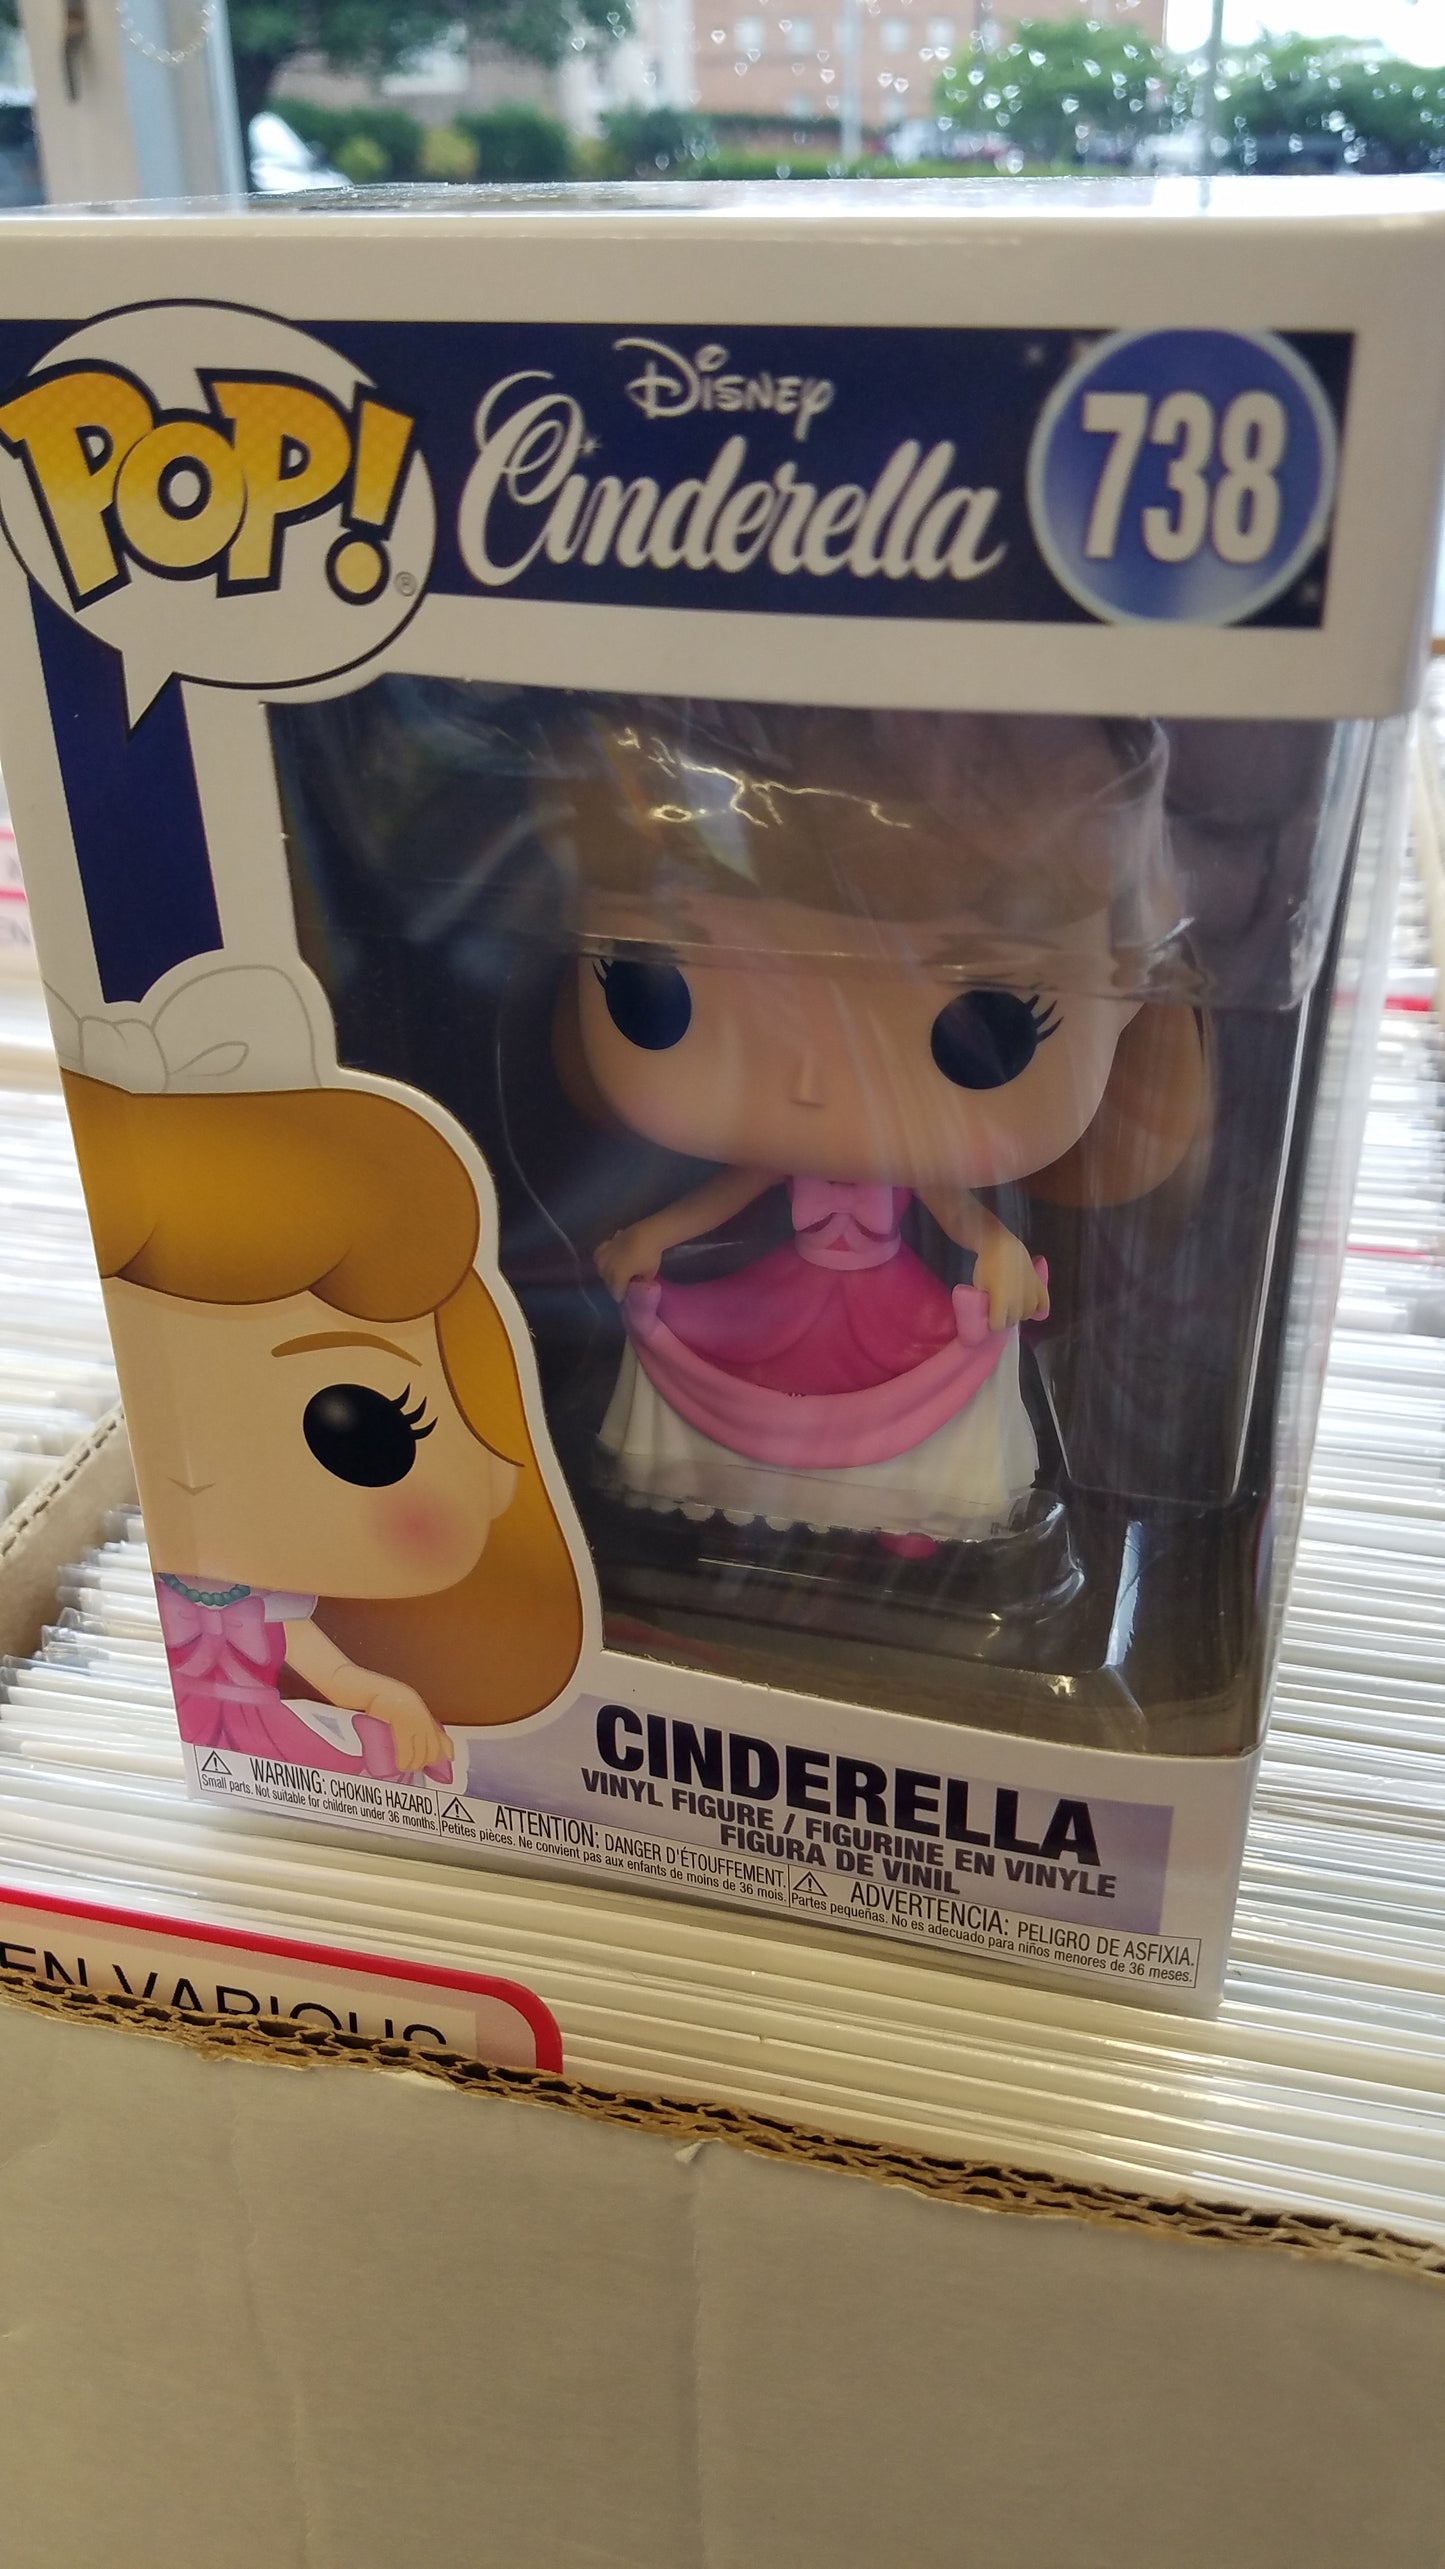 Cinderella #738 Disney Funko Pop!